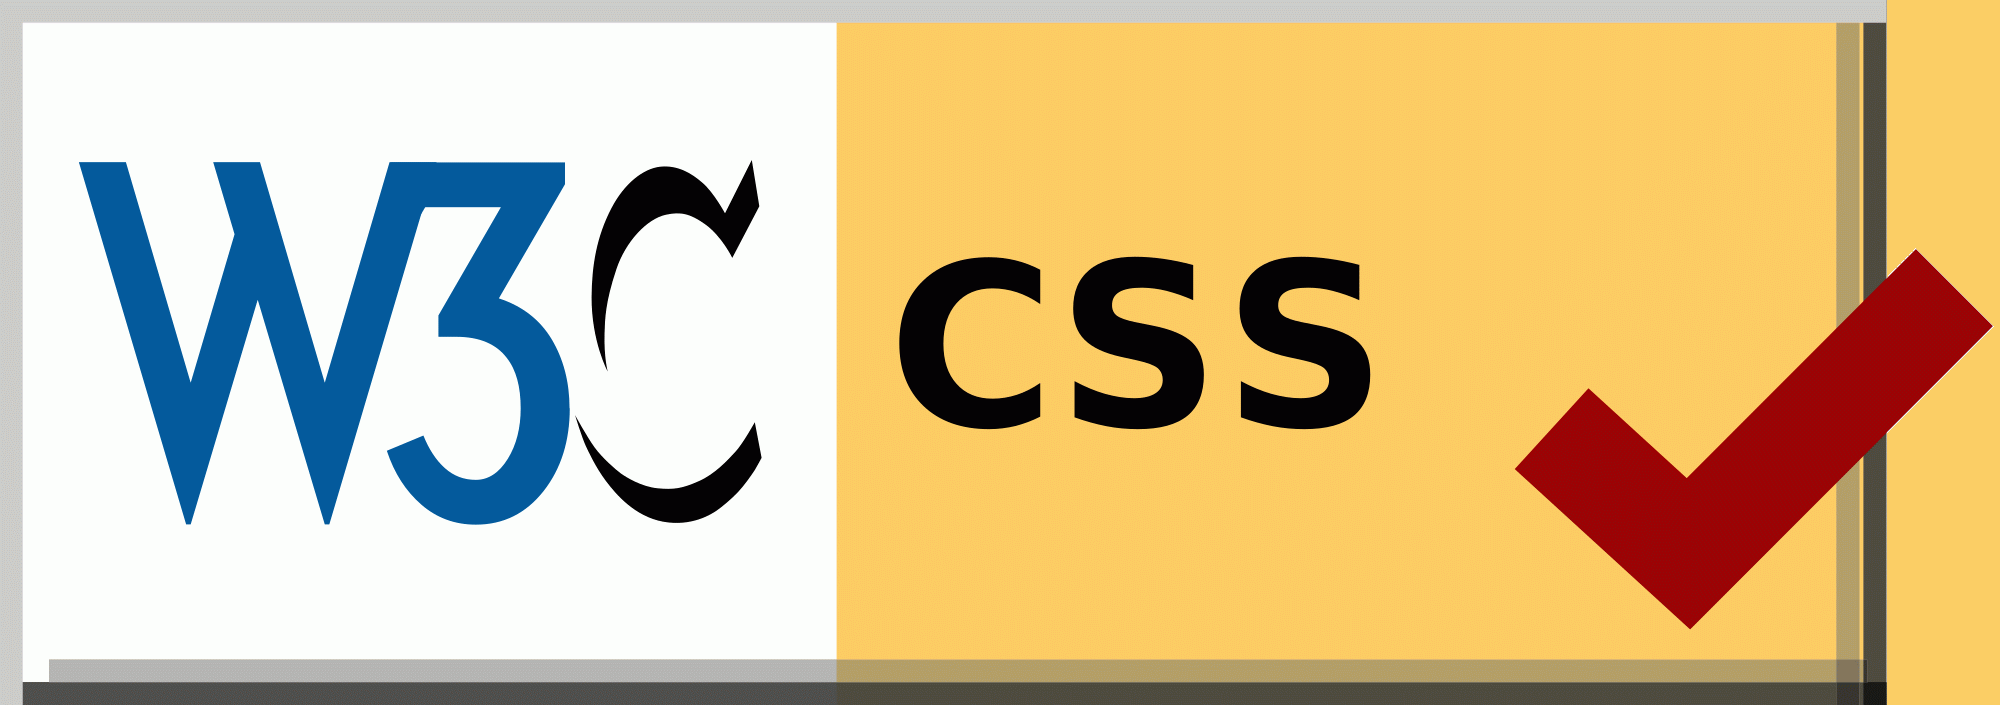 W3C: Valid CSS!